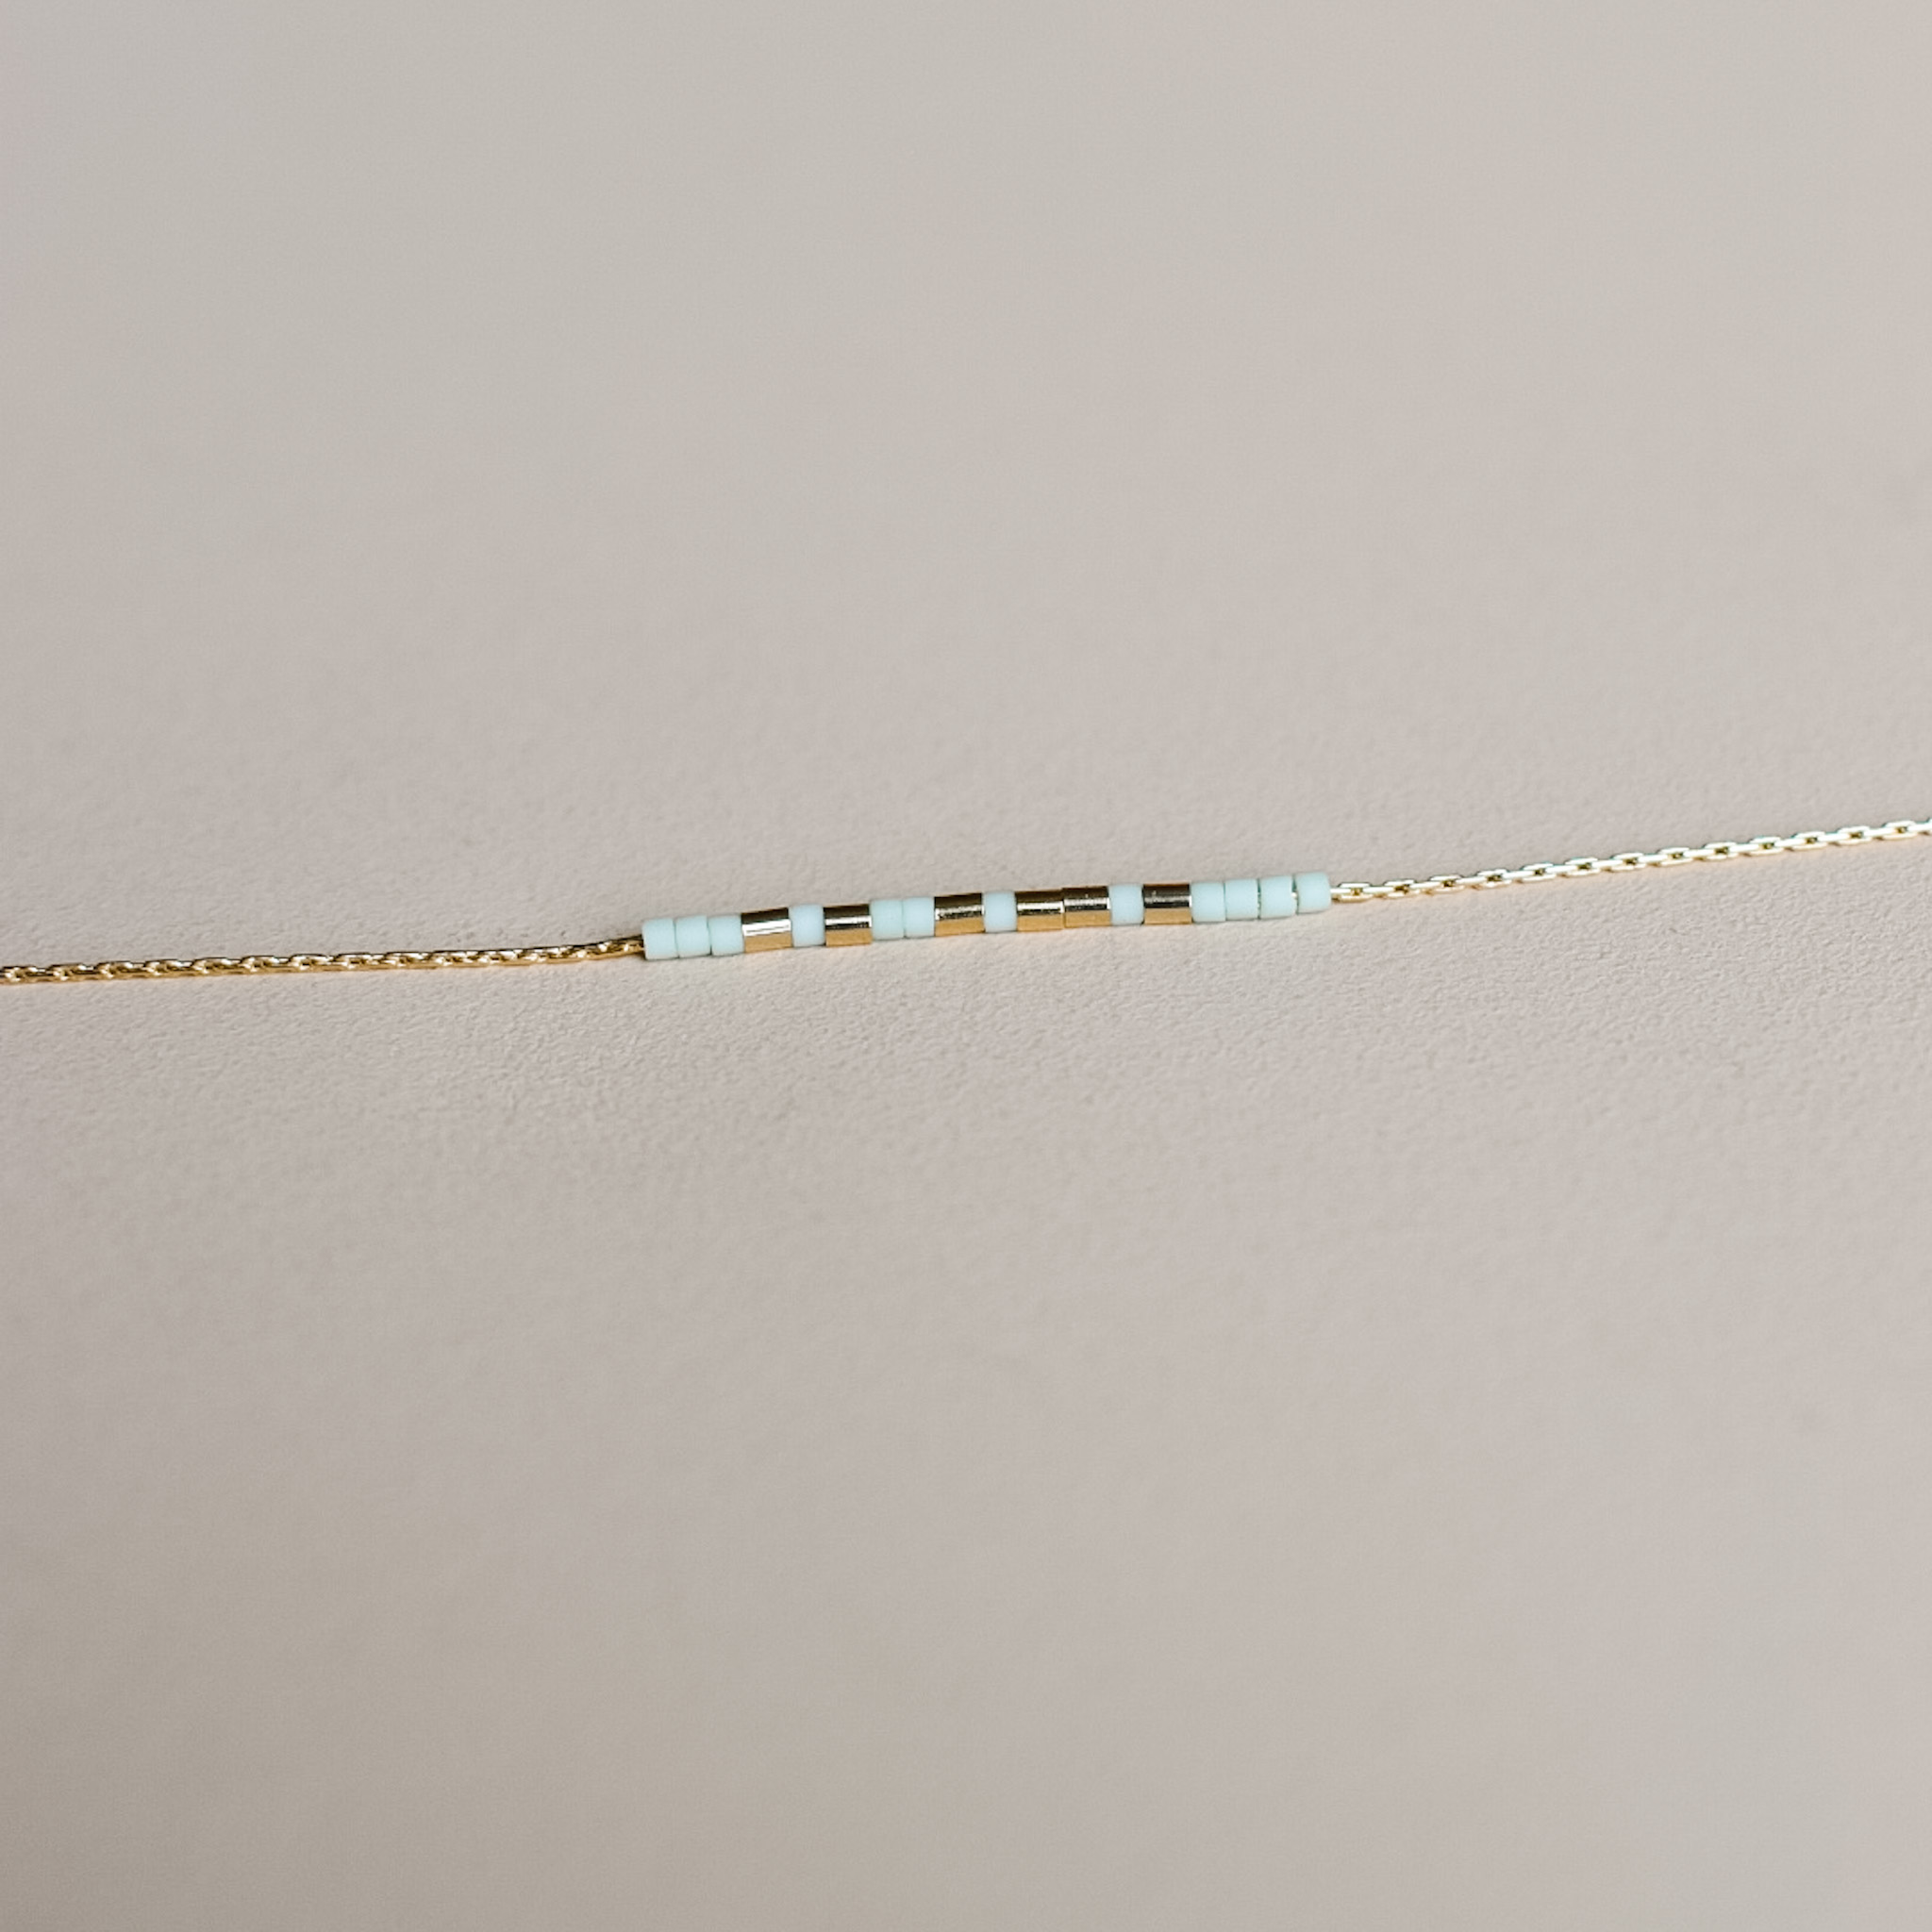 Morse Code Necklace